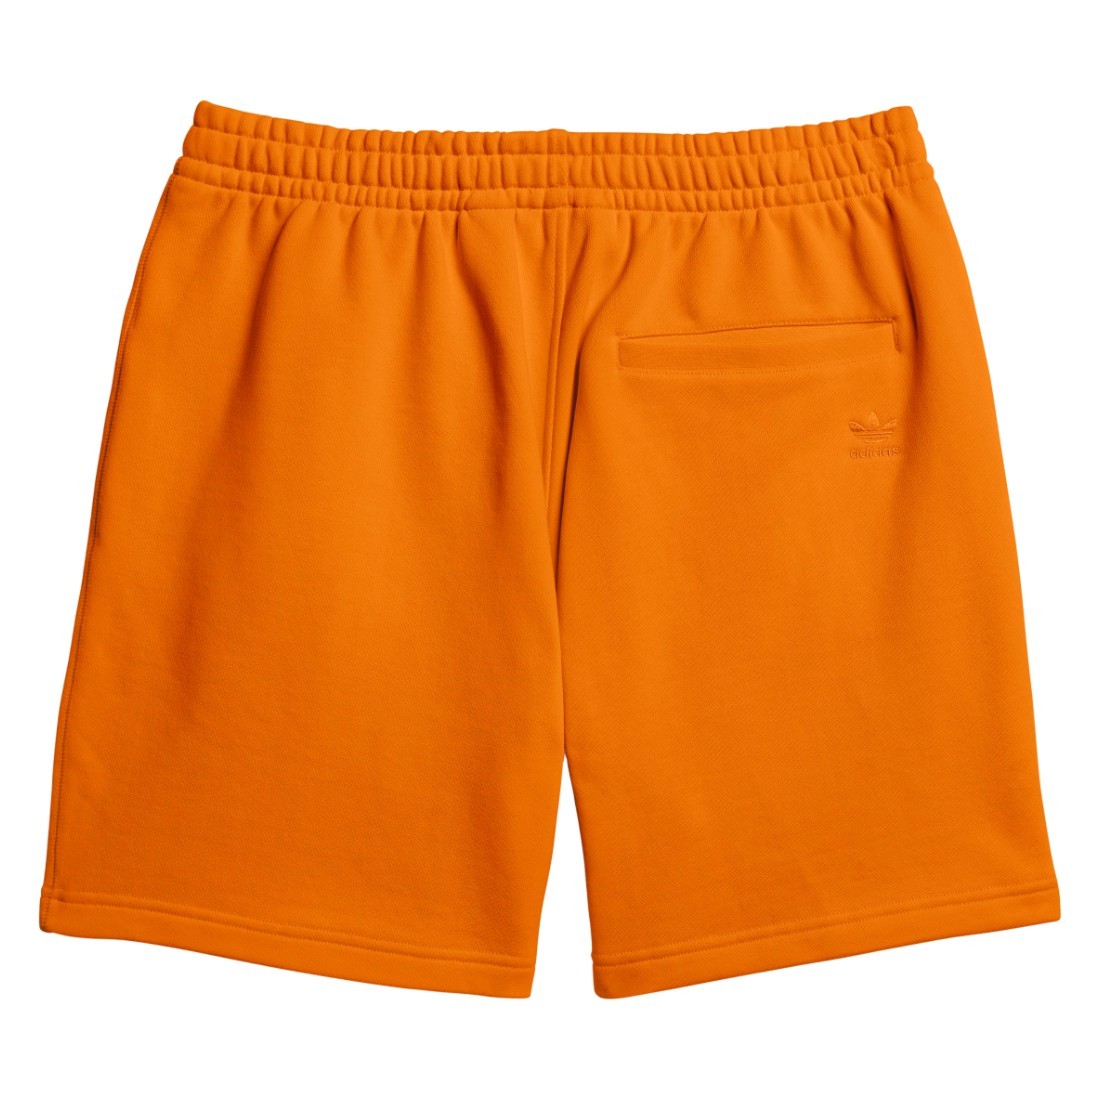 Basic short. Шорты адидас оранжевые. Adidas шорты оранжевые. Оранжевые шорты подростковые адидас. Оранжевые шорты с панамкой.